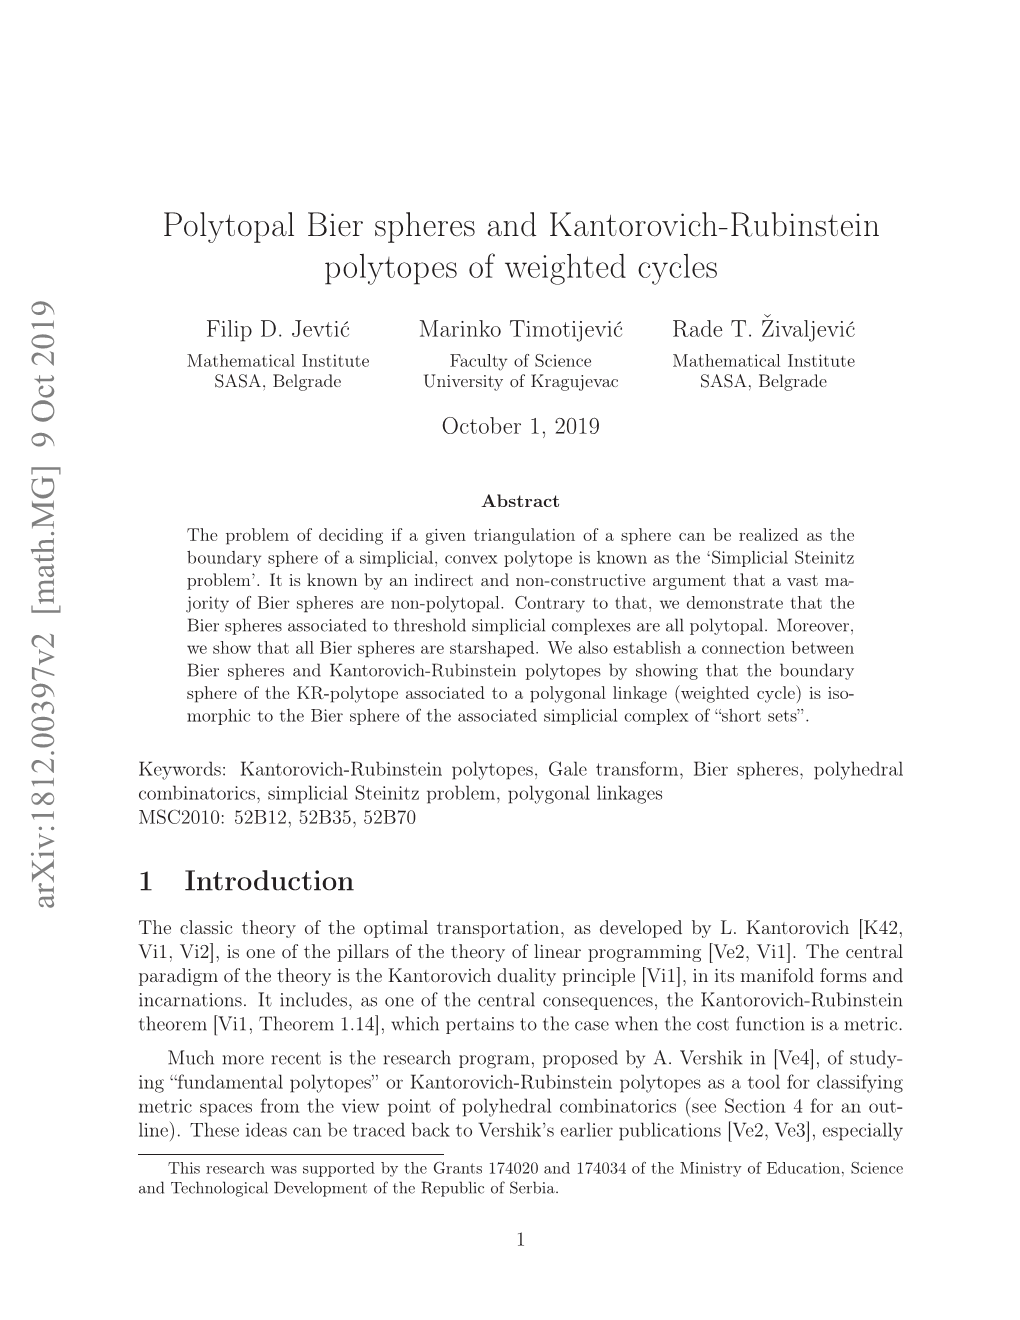 Polytopal Bier Spheres and Kantorovich-Rubinstein Polytopes